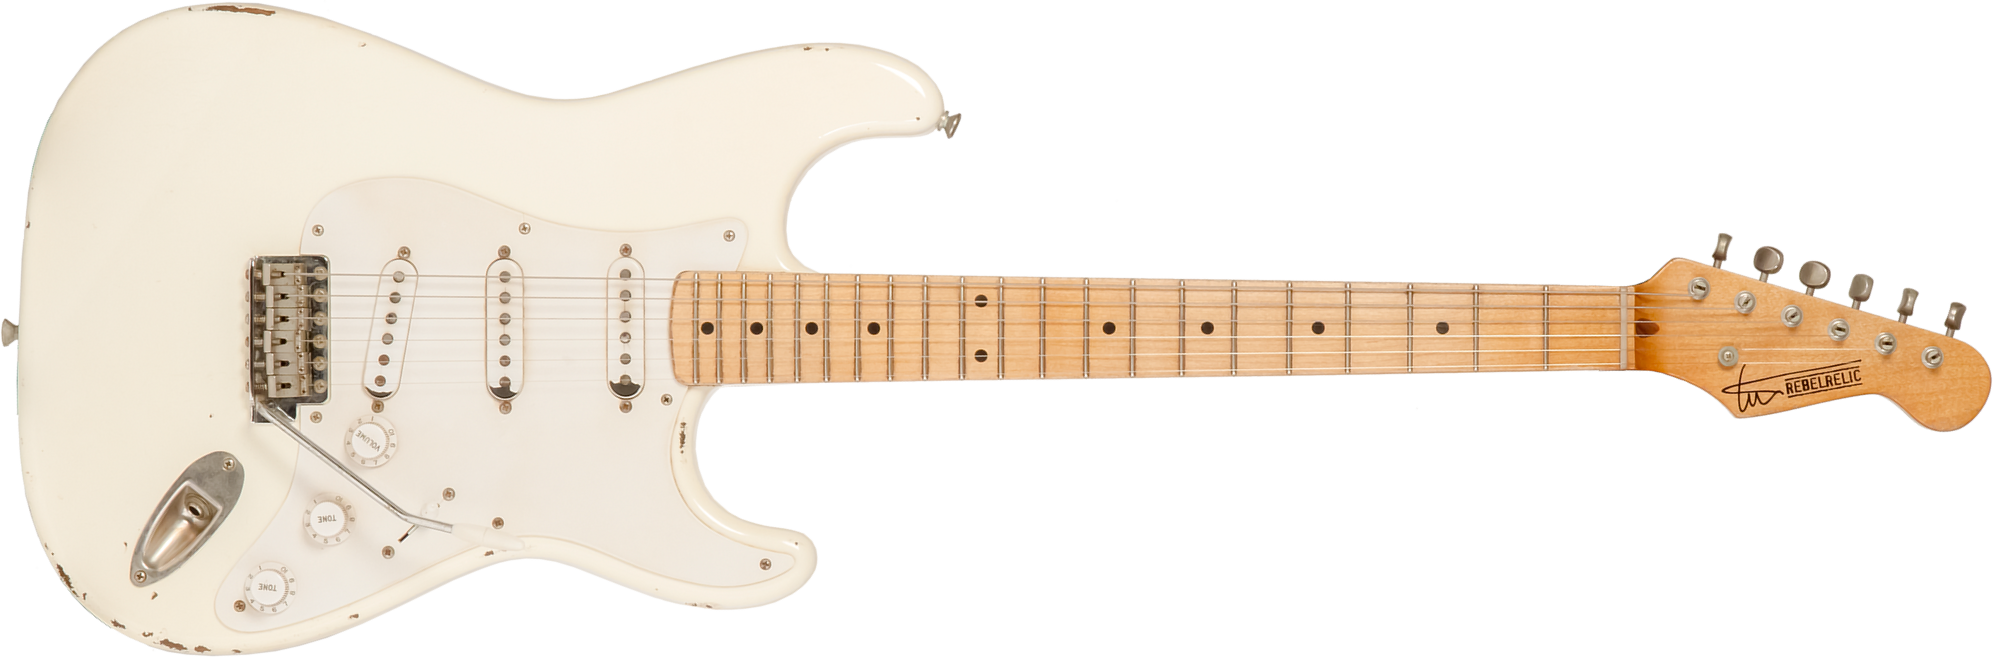 Rebelrelic S-series 1955 3s Trem Mn #231006 - Olympic White - E-Gitarre in Str-Form - Main picture